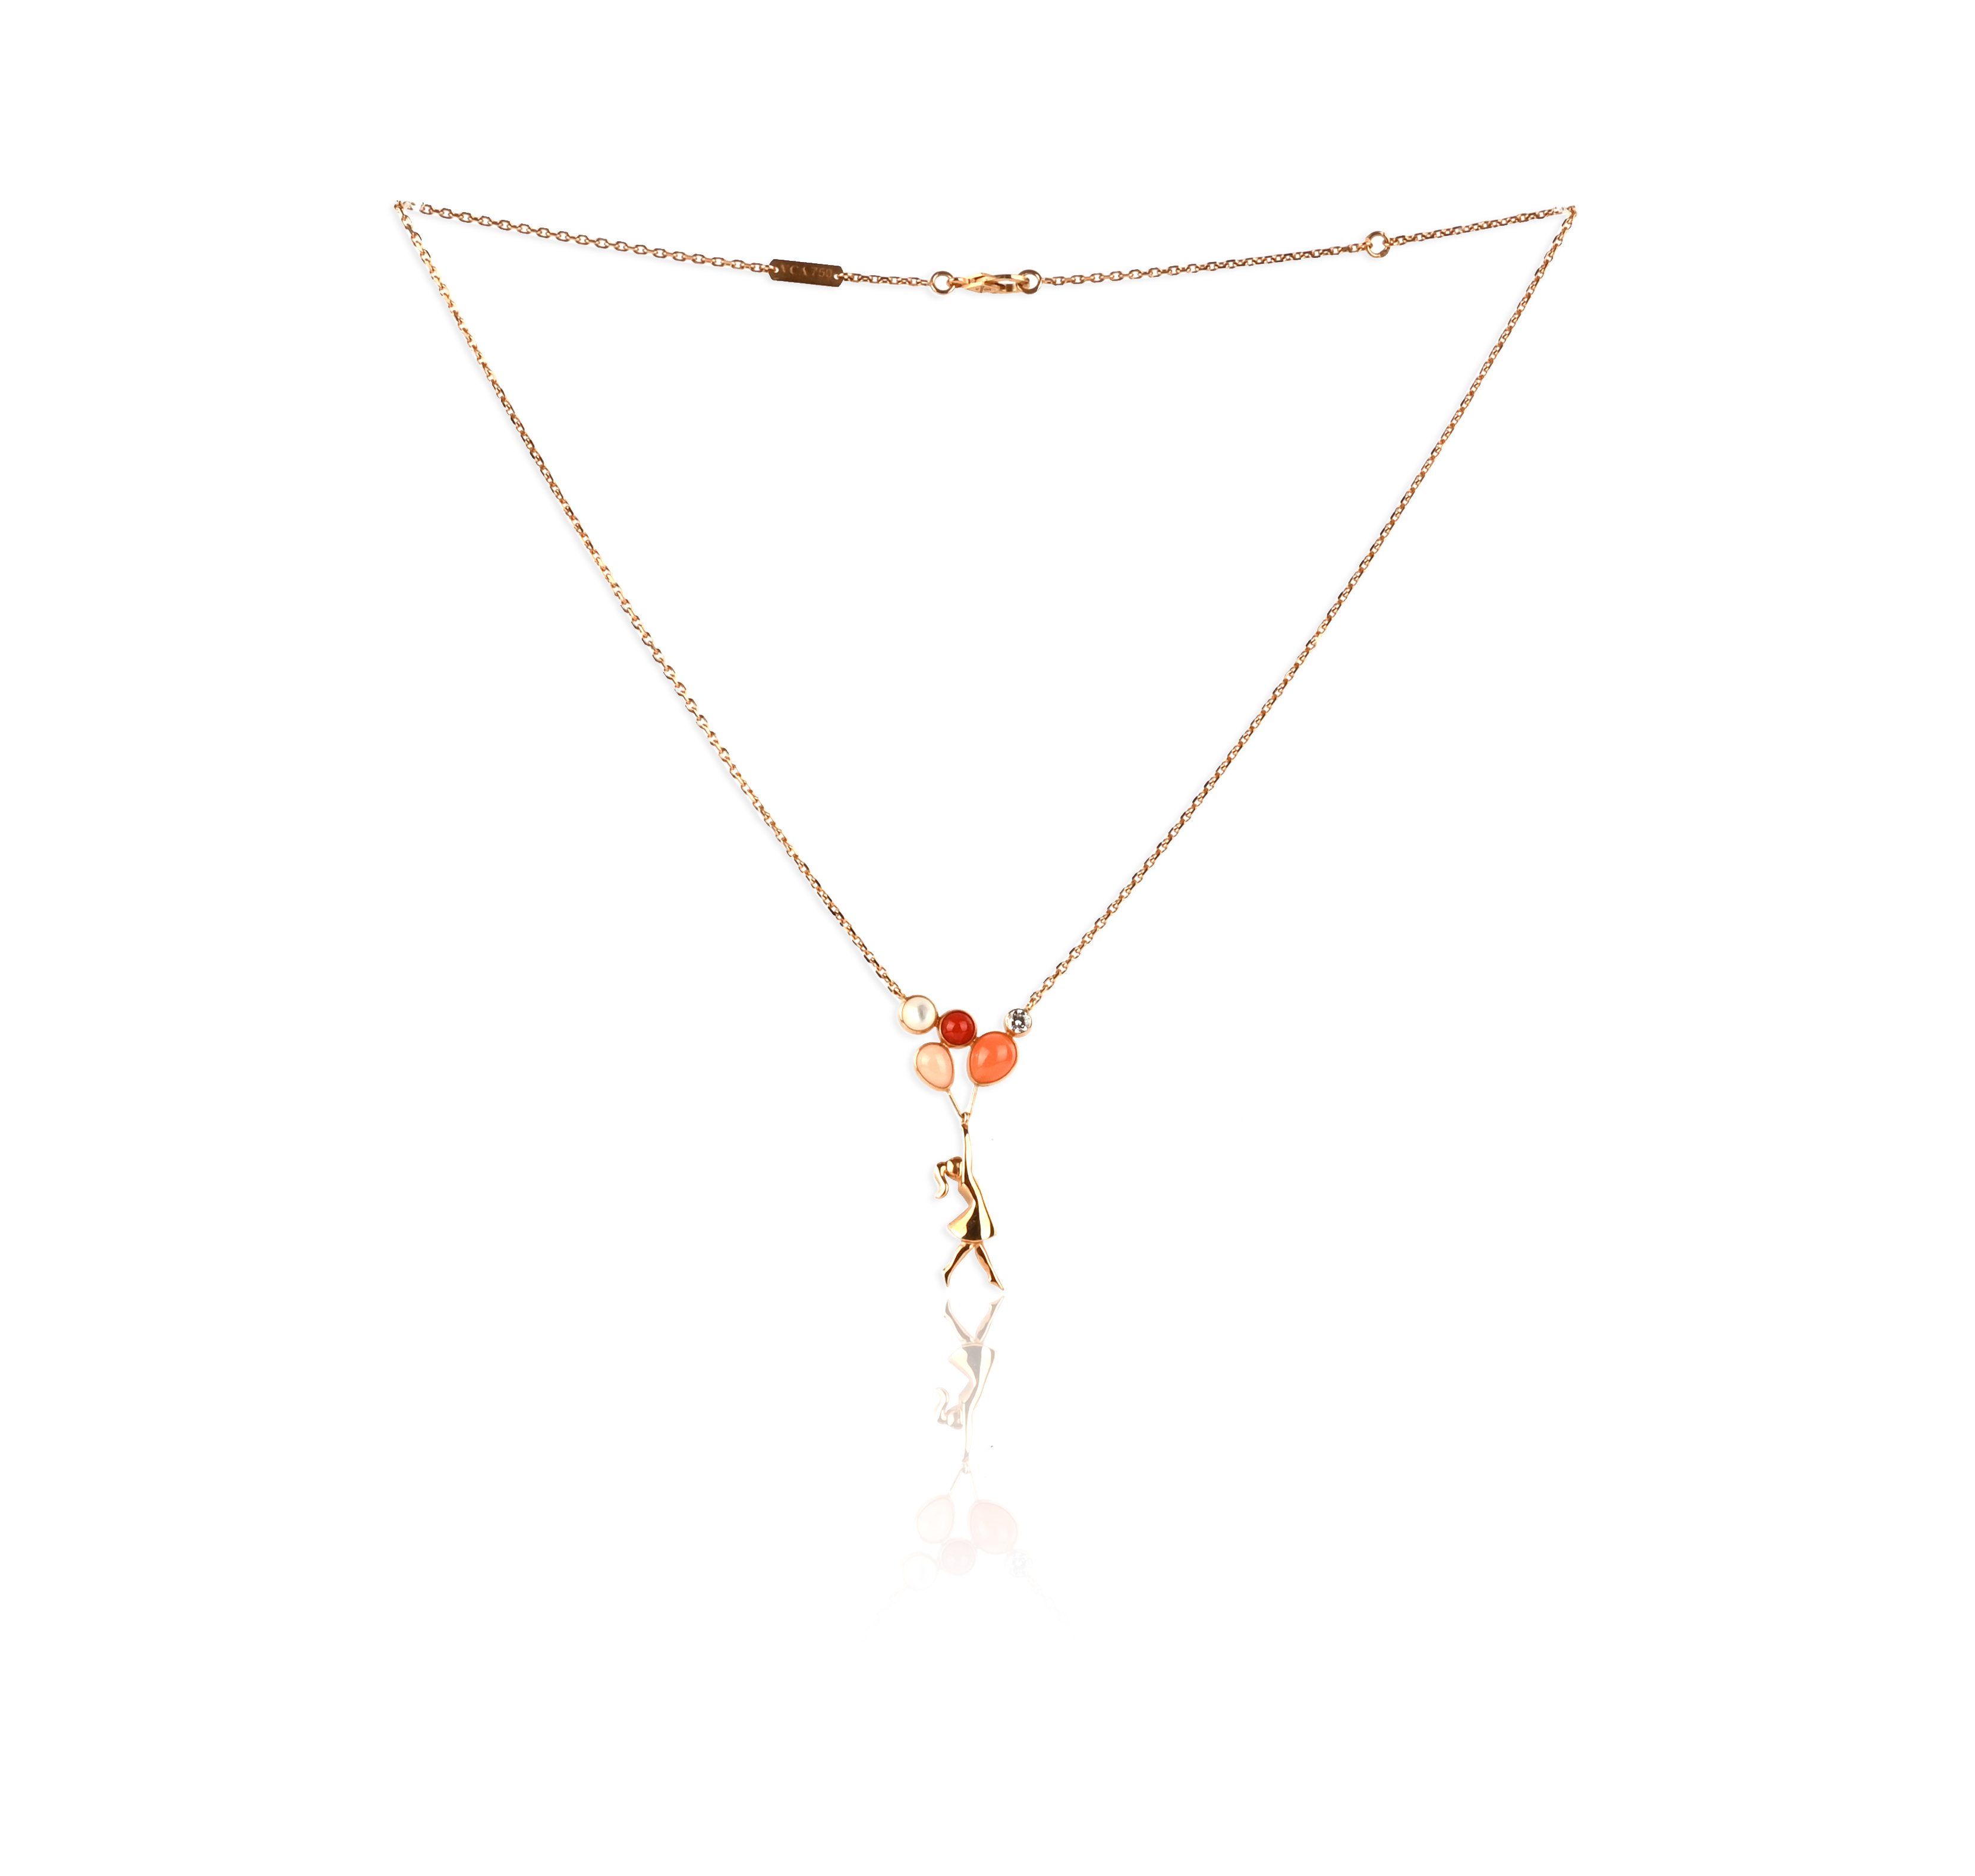 Van Cleef & Arpels, a mother of pearl, coral and diamond pendant, 'Mercredi à Paris', designed as